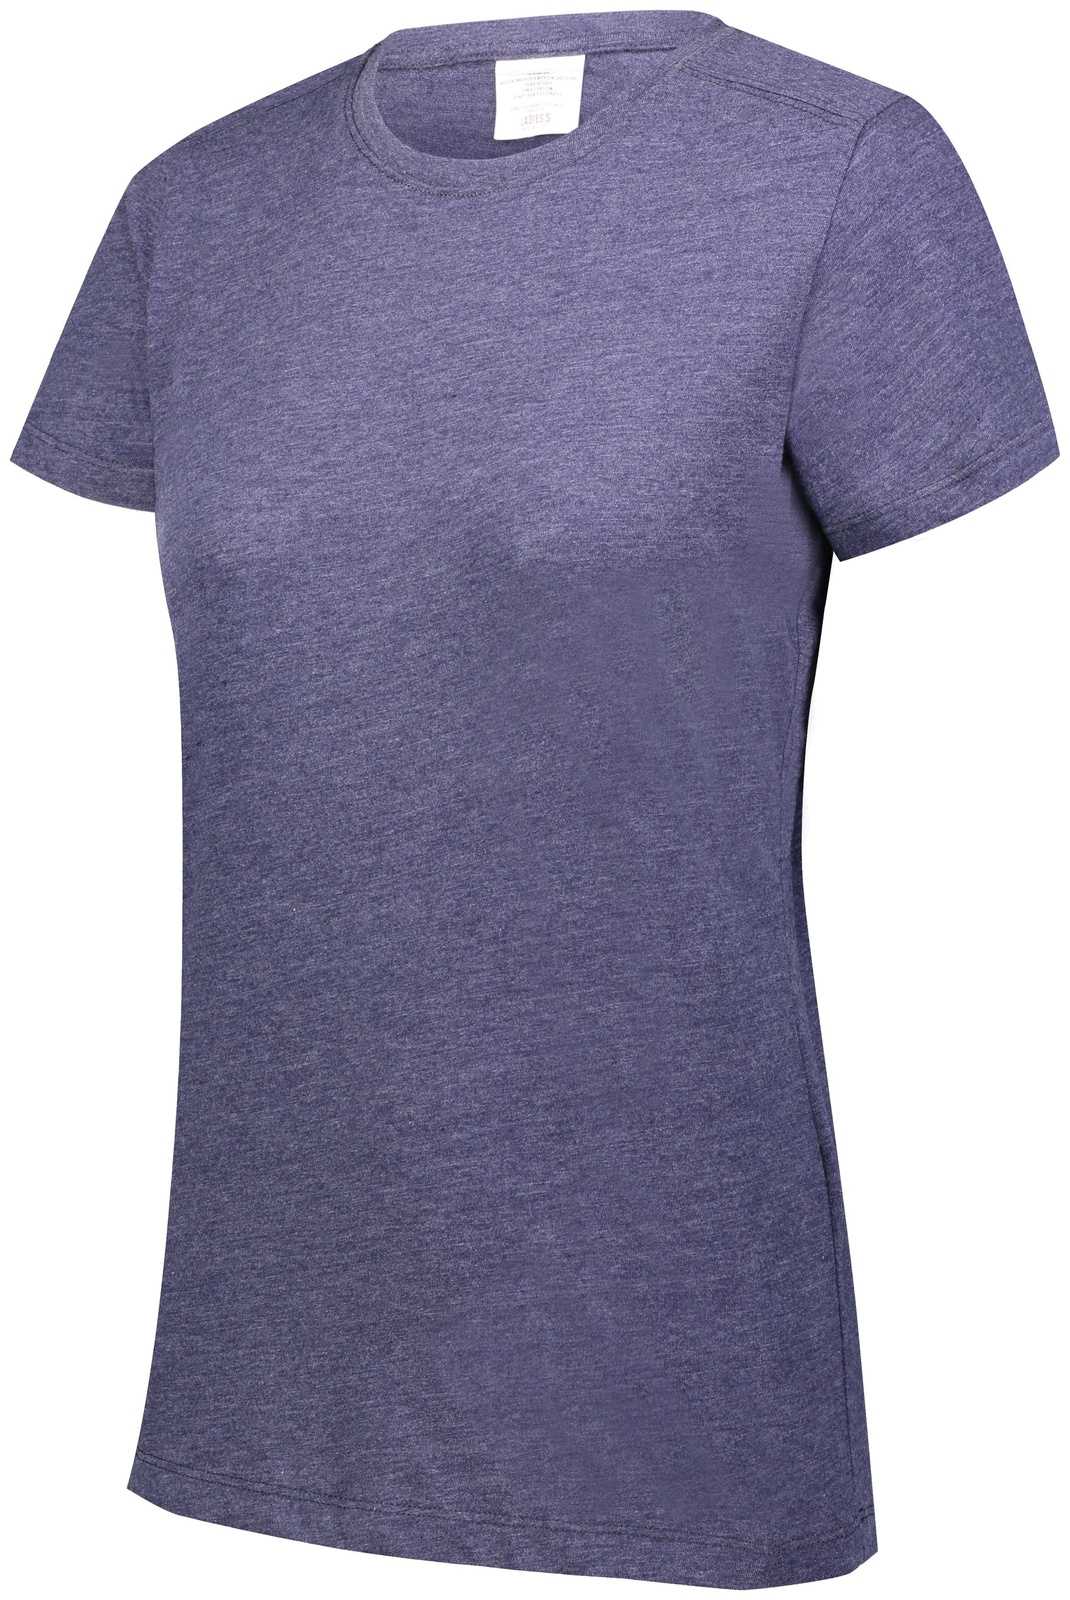 Augusta 3067 Ladies Tri-Blend T-Shirt - Navy Heather - HIT a Double